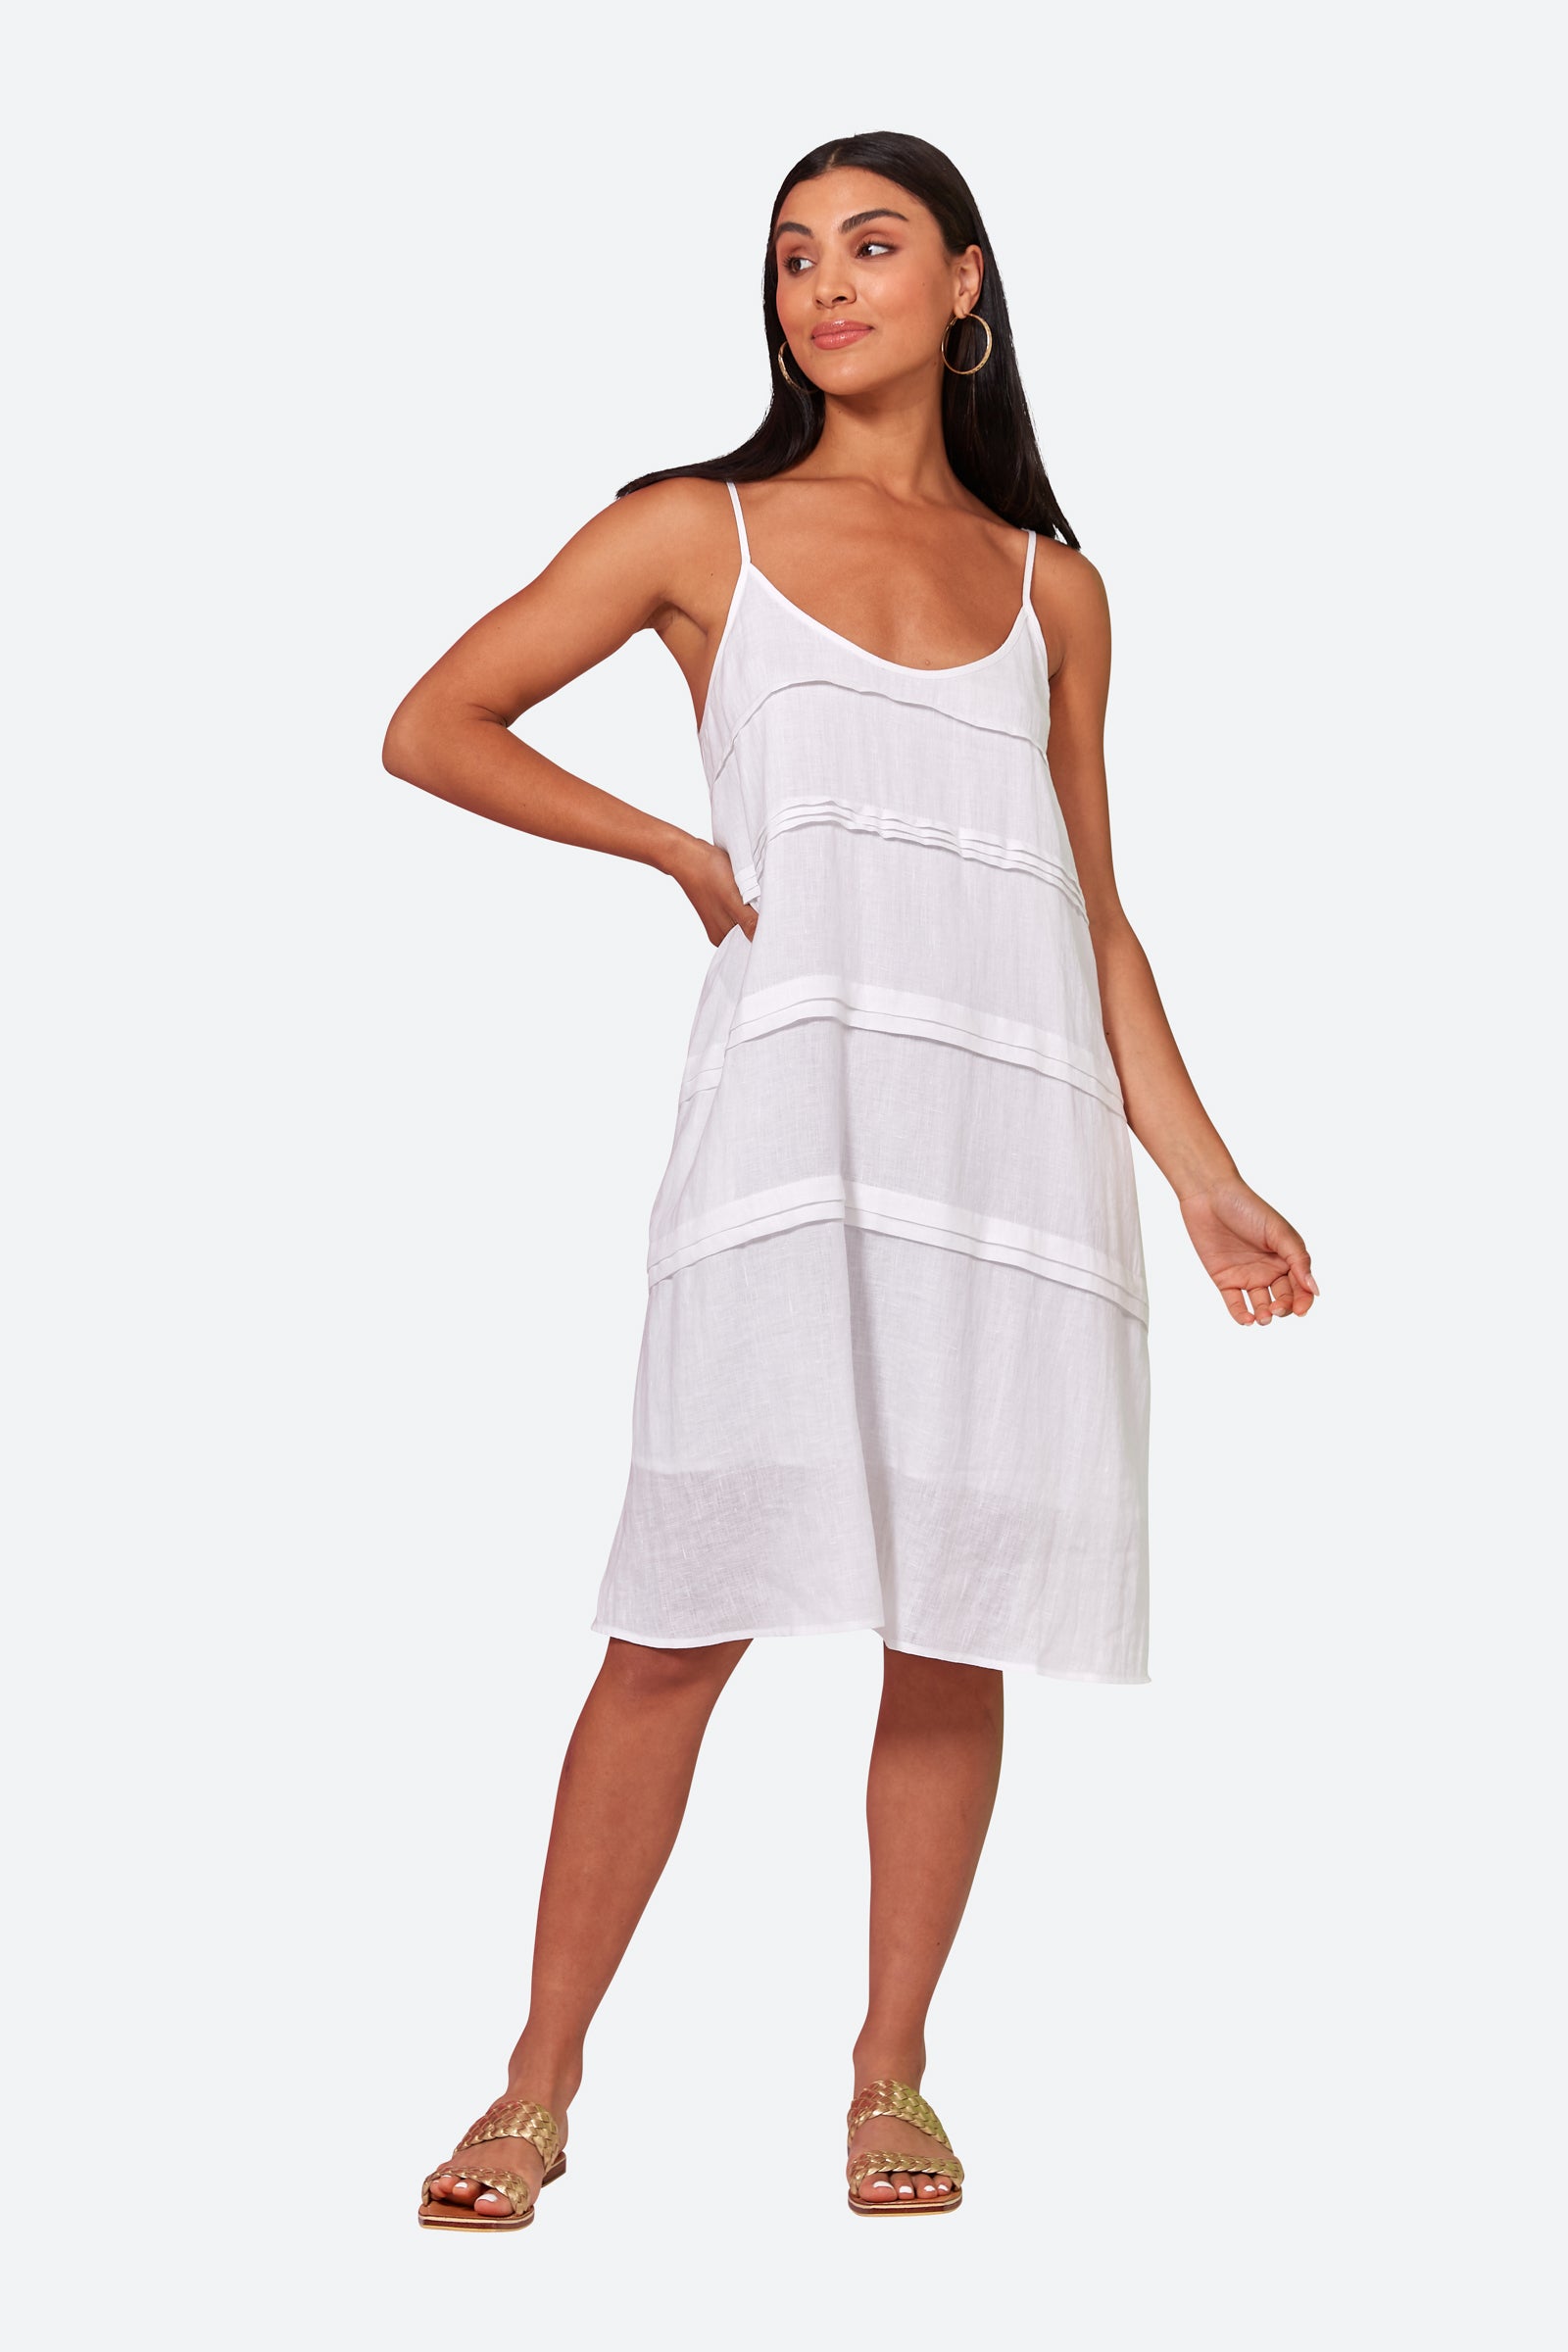 La Vie Tank Dress - Blanc - eb&ive Clothing - Dress Strappy Mid Linen